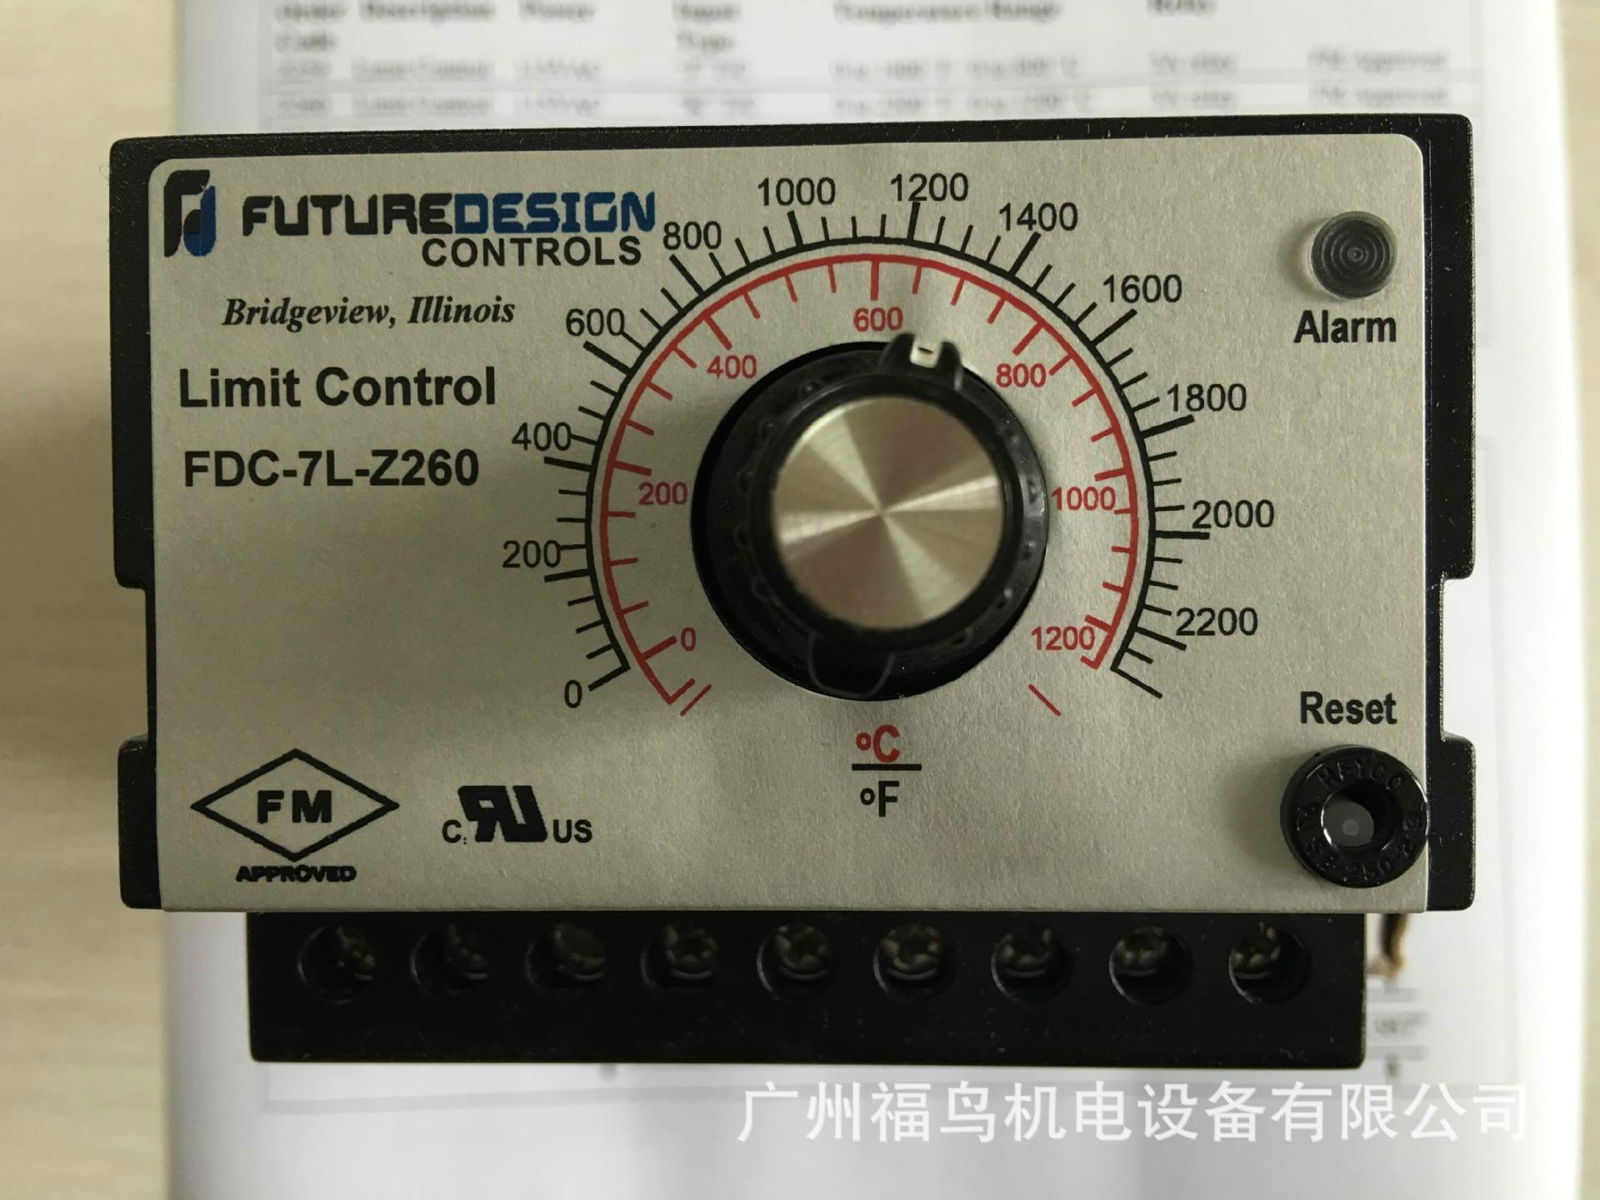 FUTURE DESIGN超溫控制器, 型號: FDC-7L-Z260